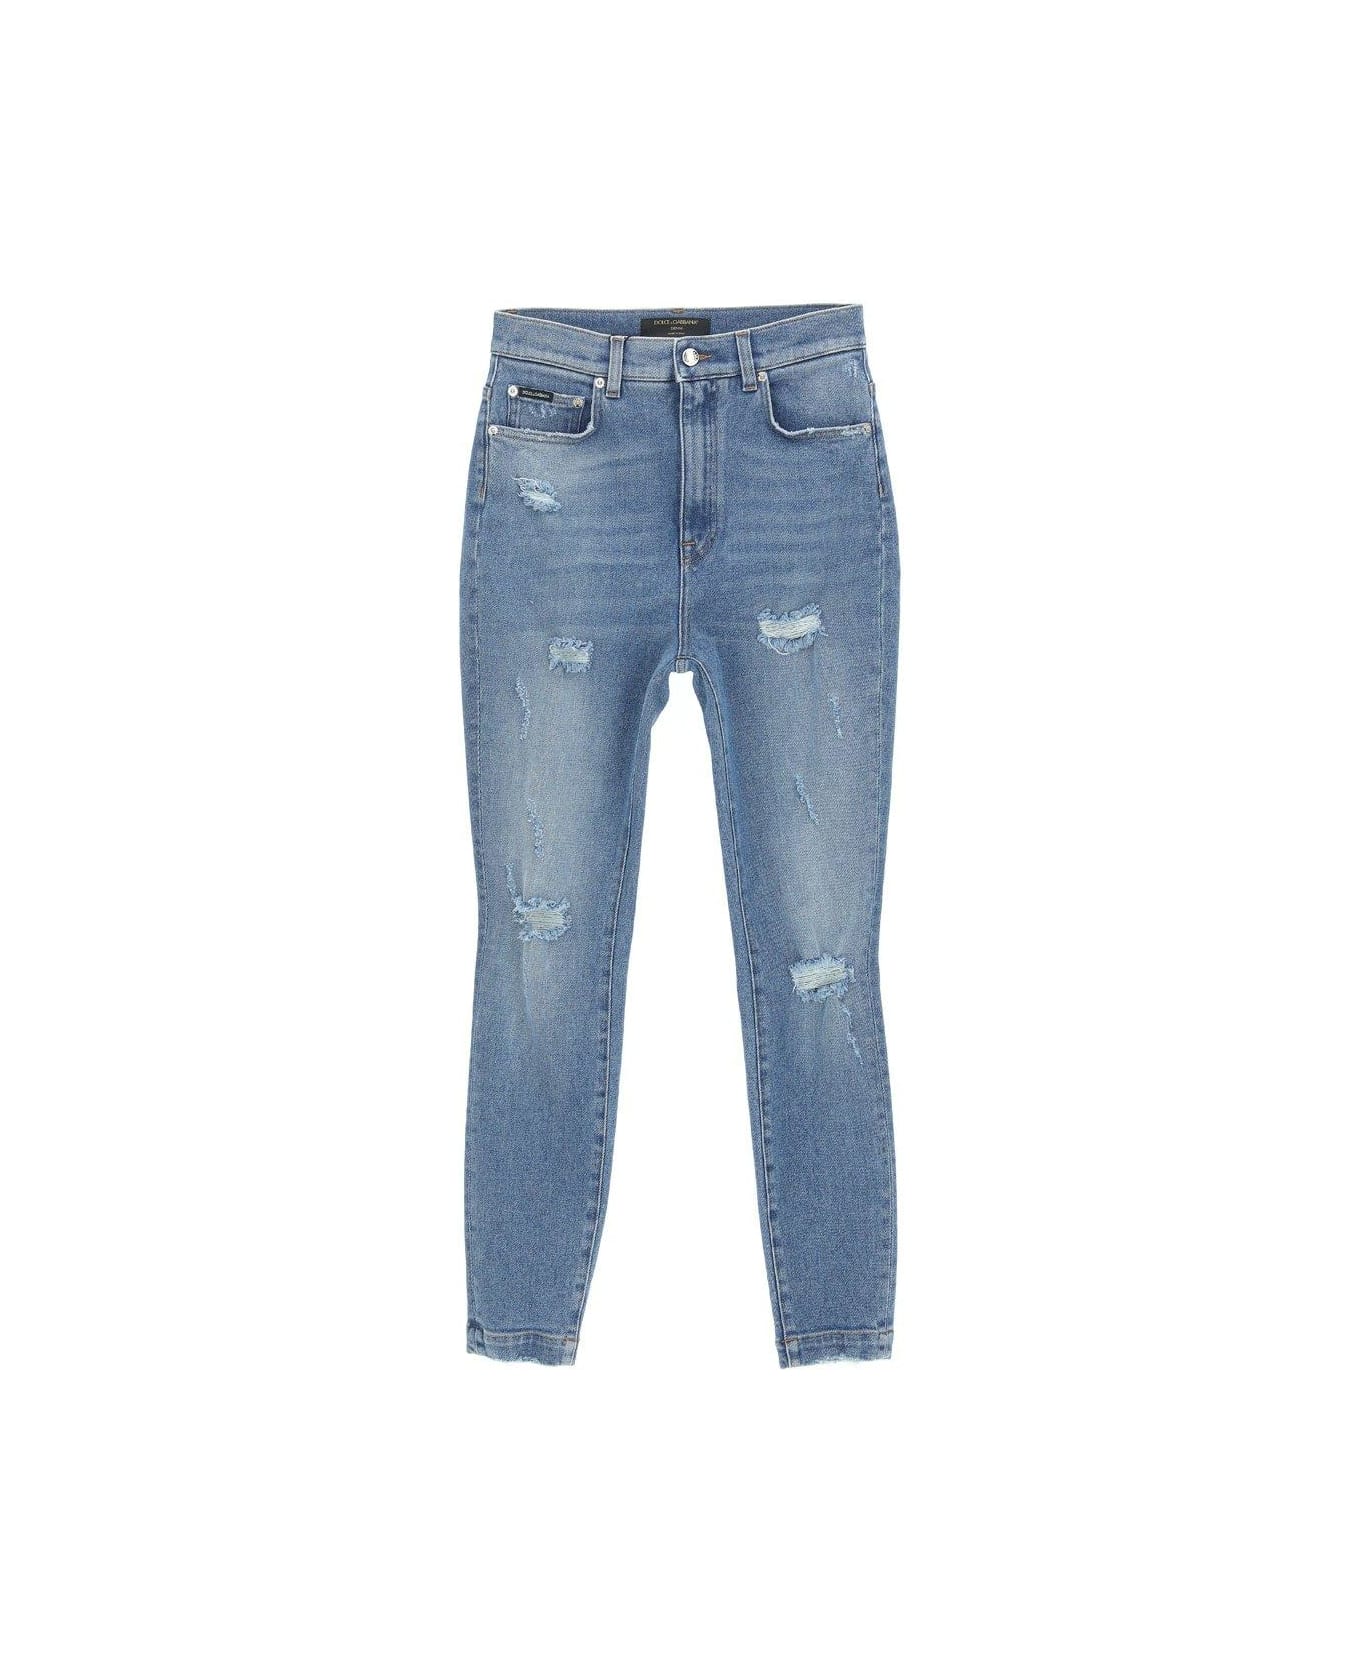 Dolce & Gabbana Distressed Grace Jeans - Blue jeans